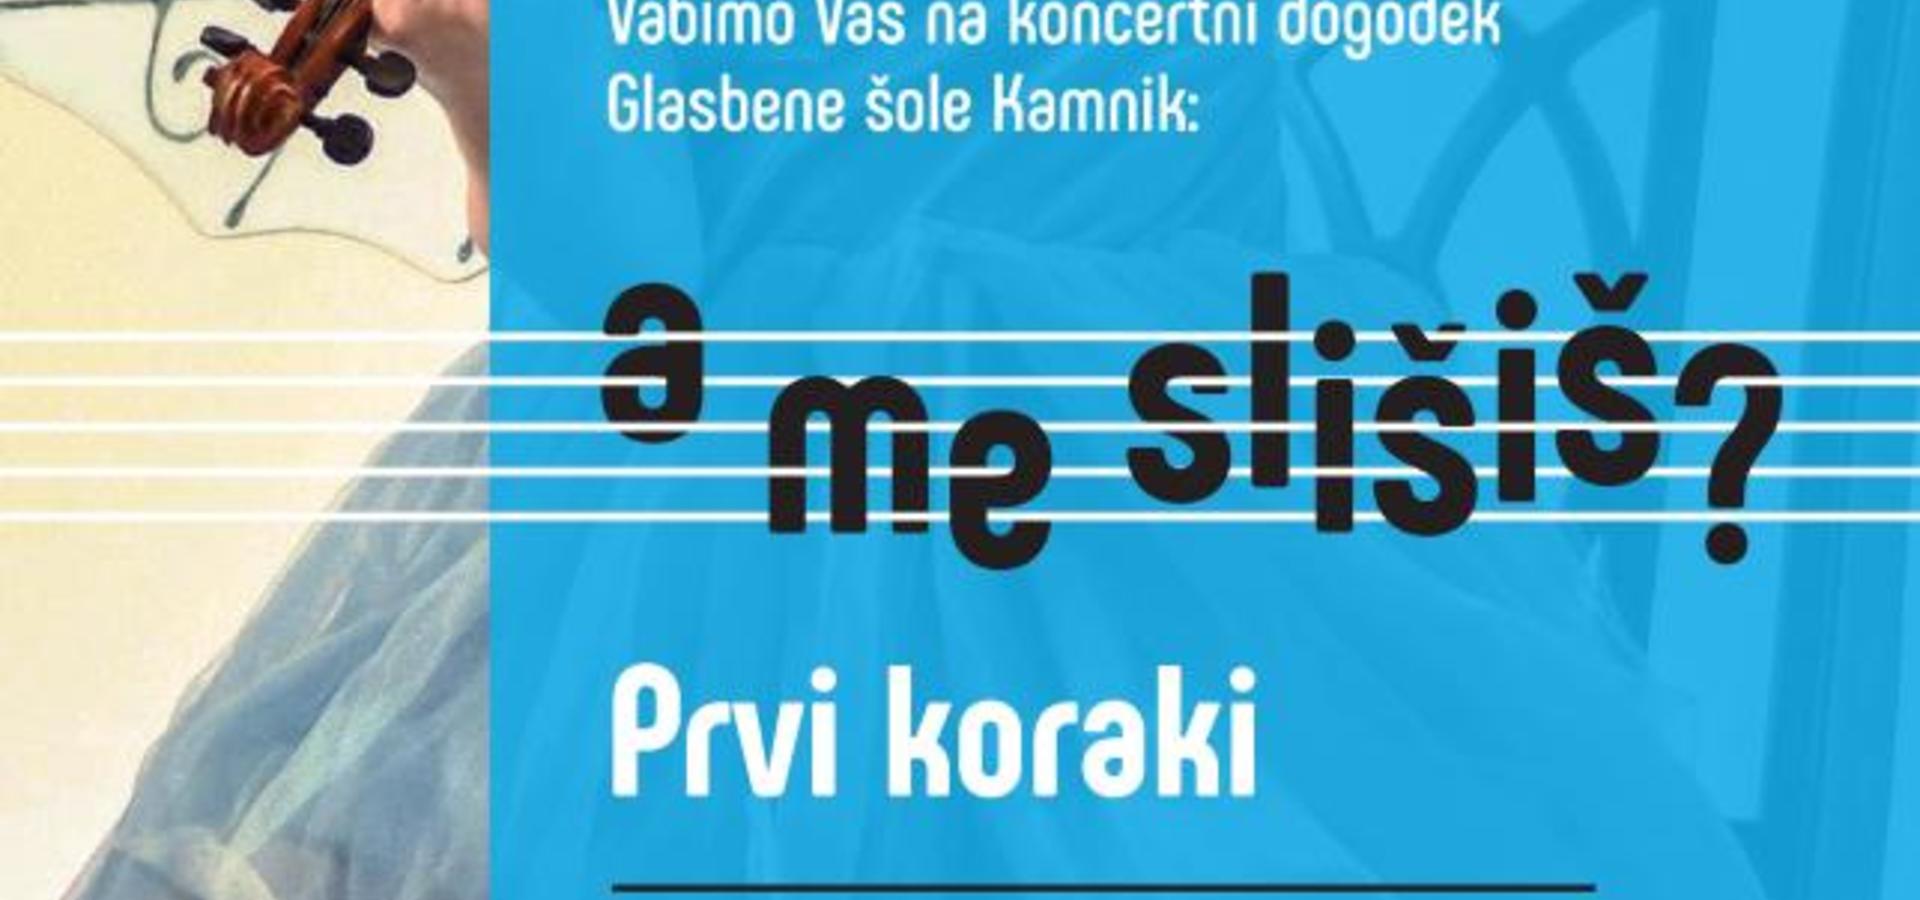 Glasbena šola Kamnik: A me slišiš?